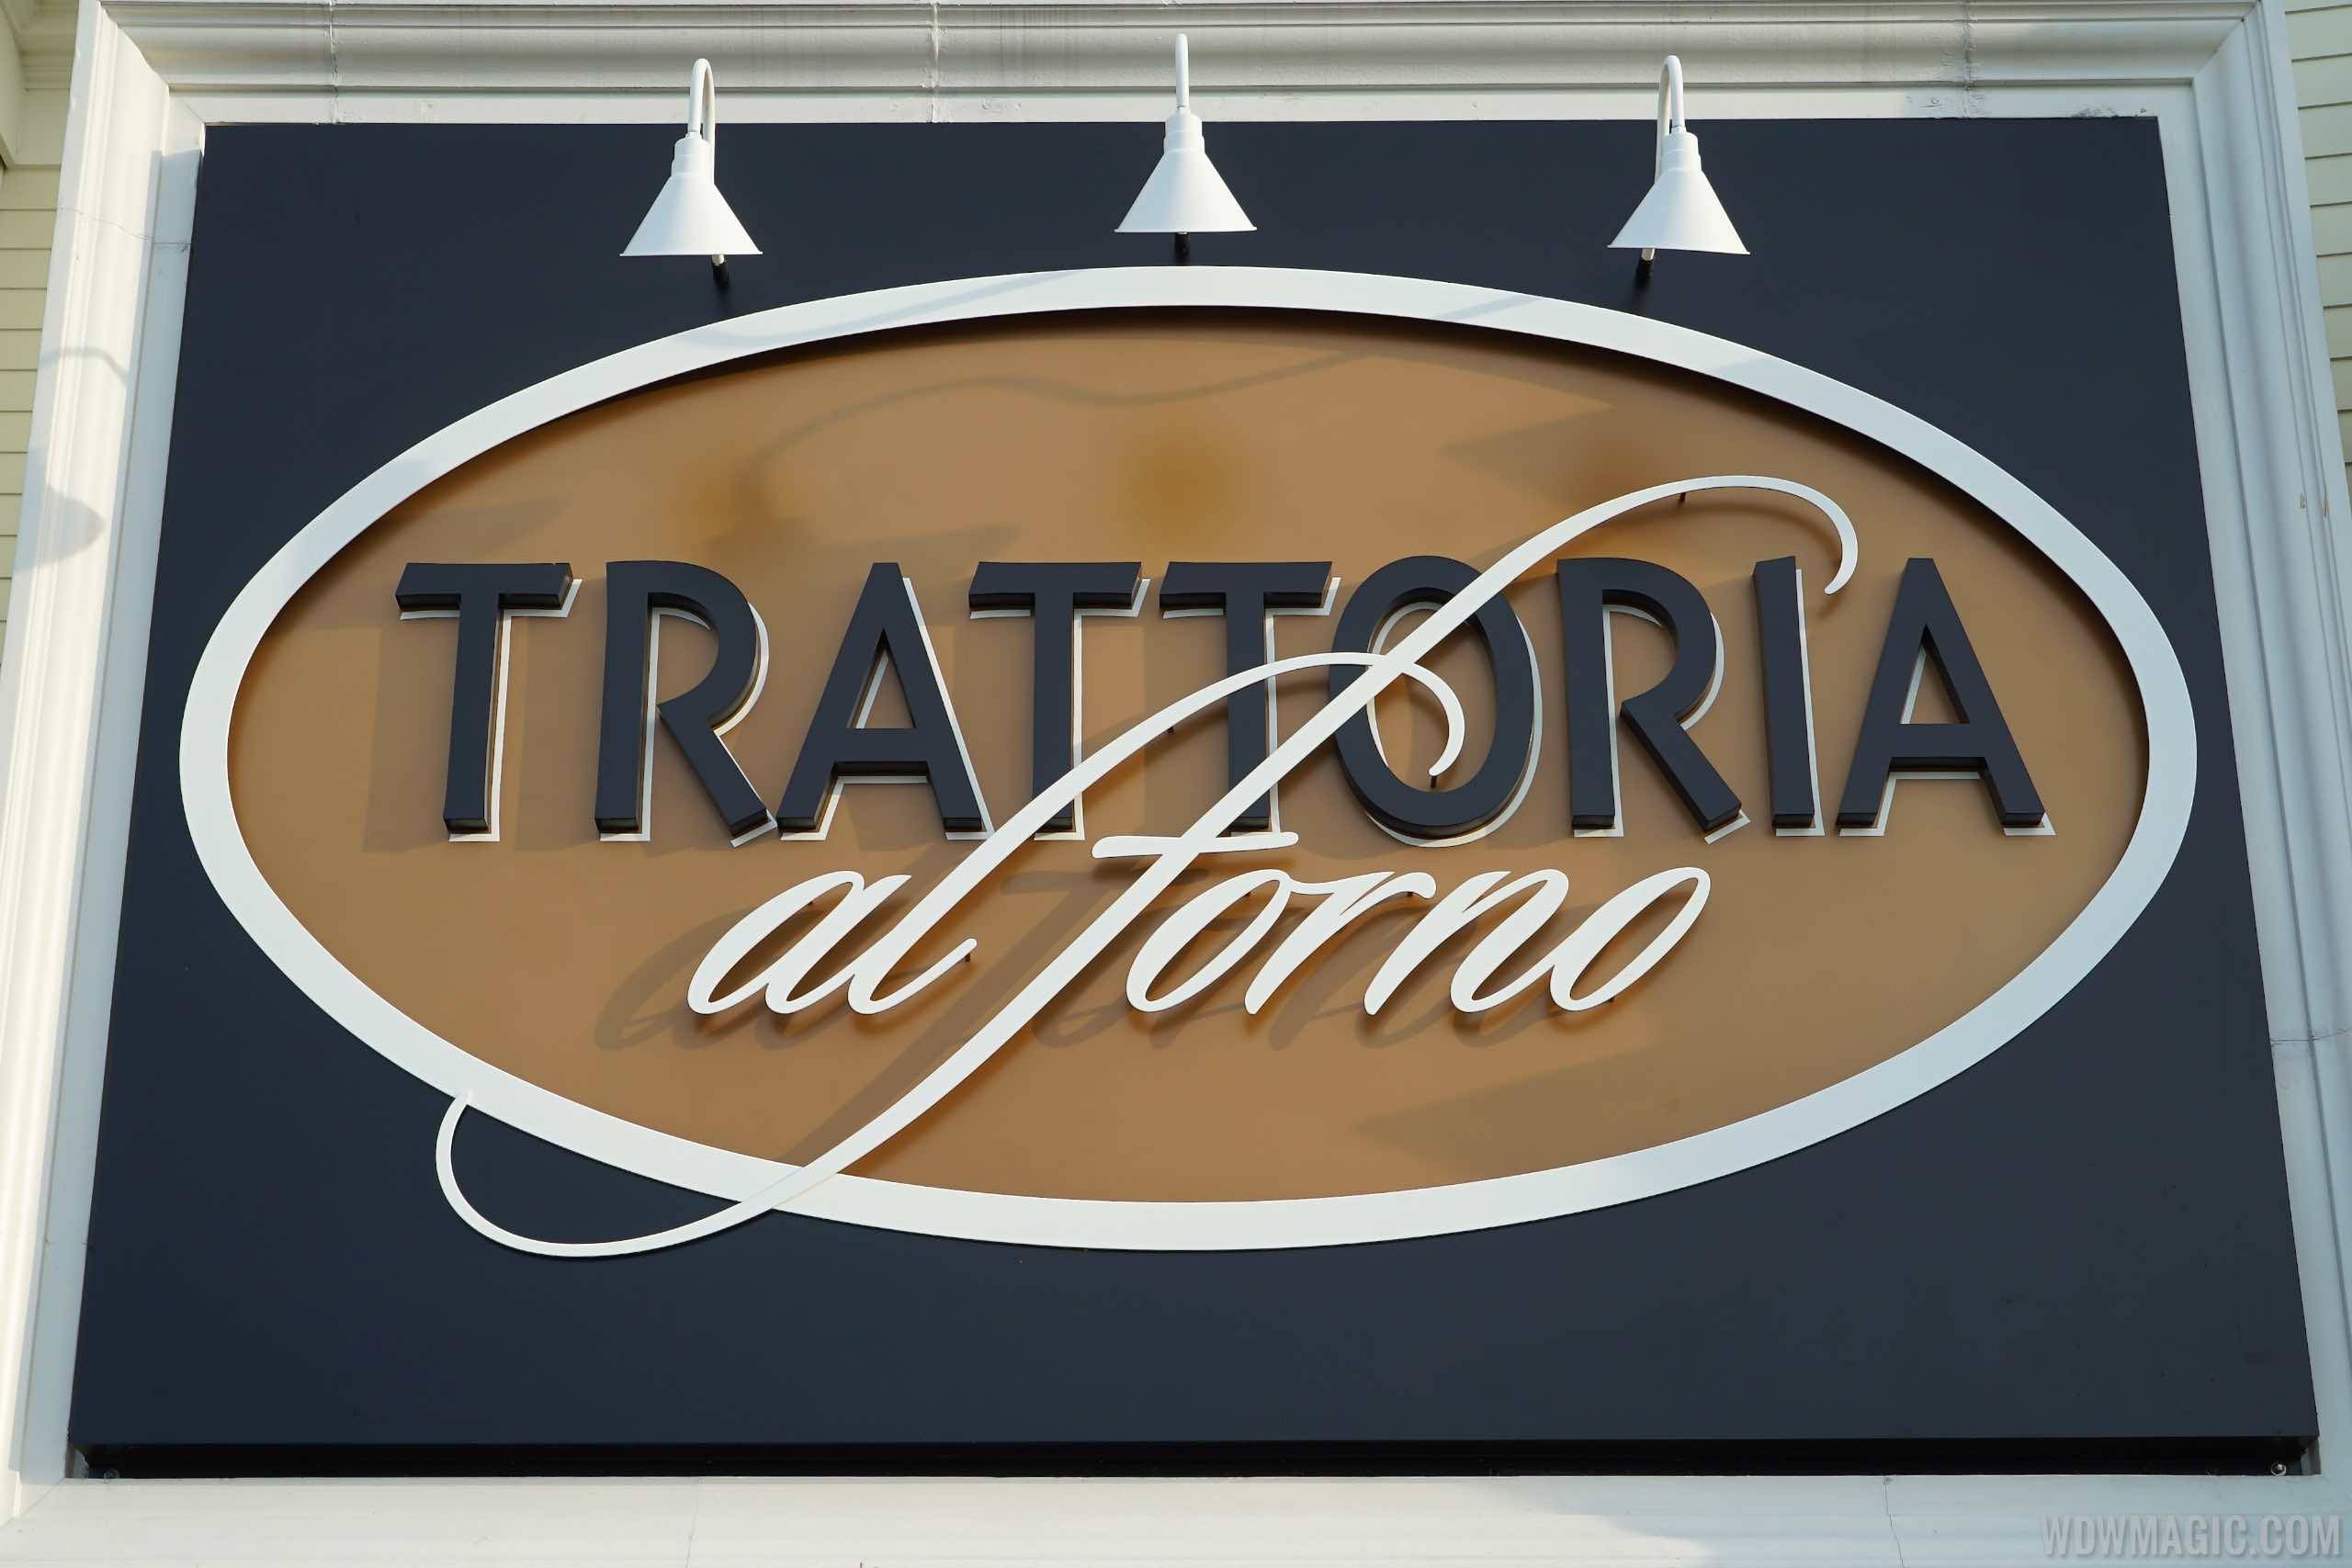 Trattoria al Forno finishing touches on exterior